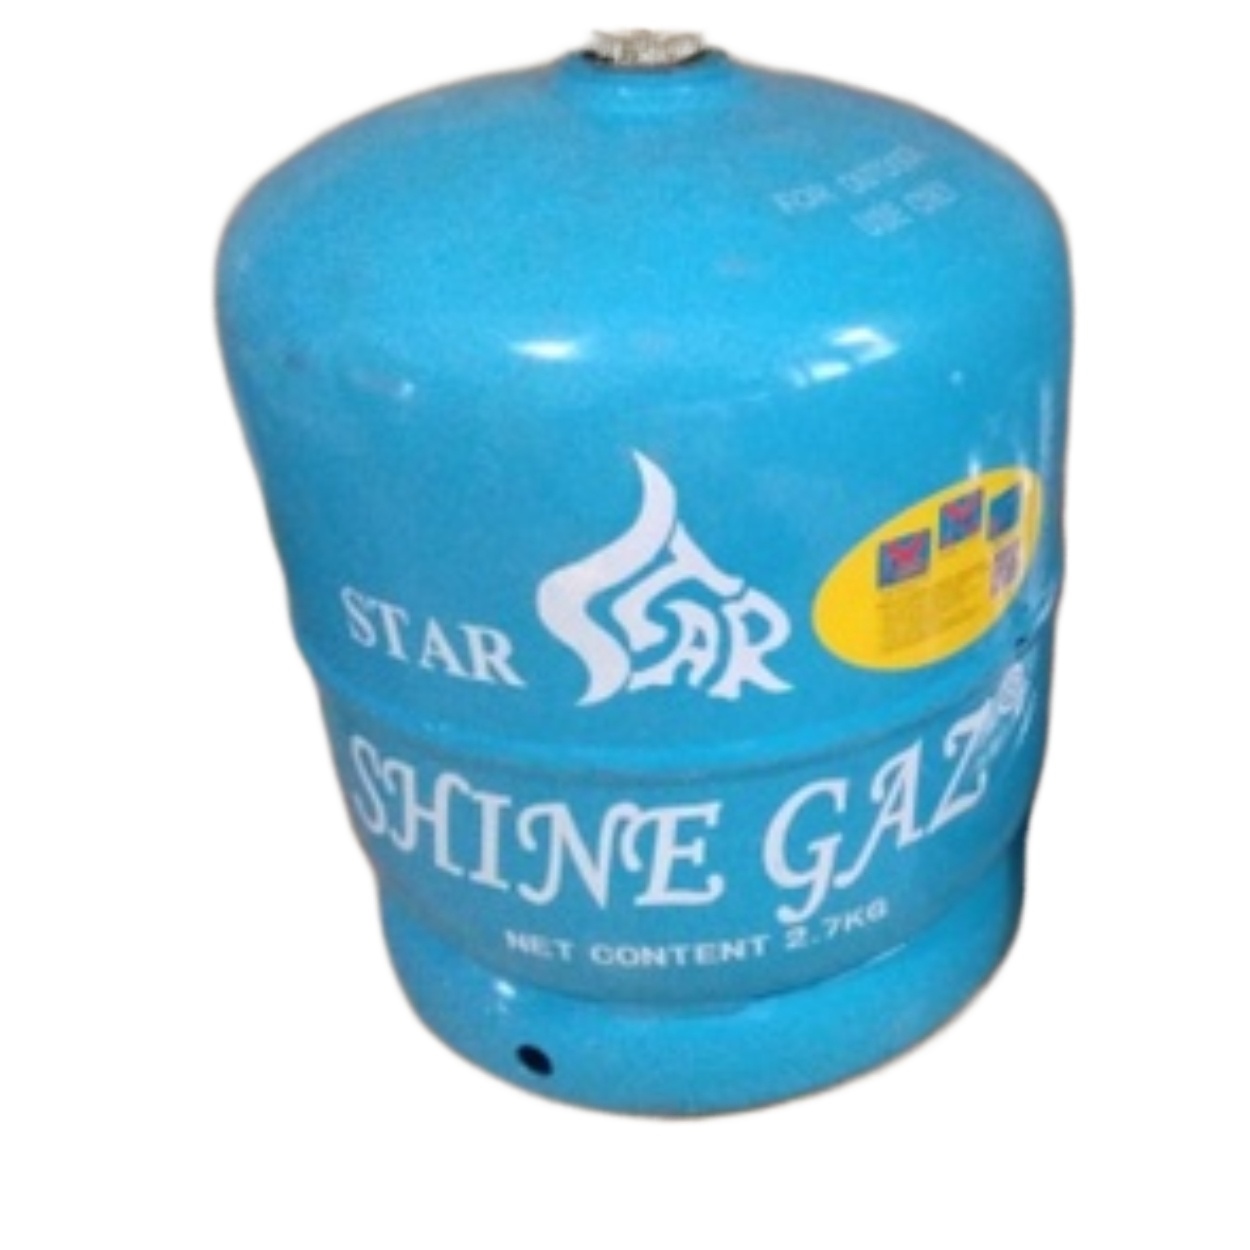 SHINE GAS SUPER KALAN COMPLETE SET【FREE GAS】 【Portable】 【GAS TANK ...